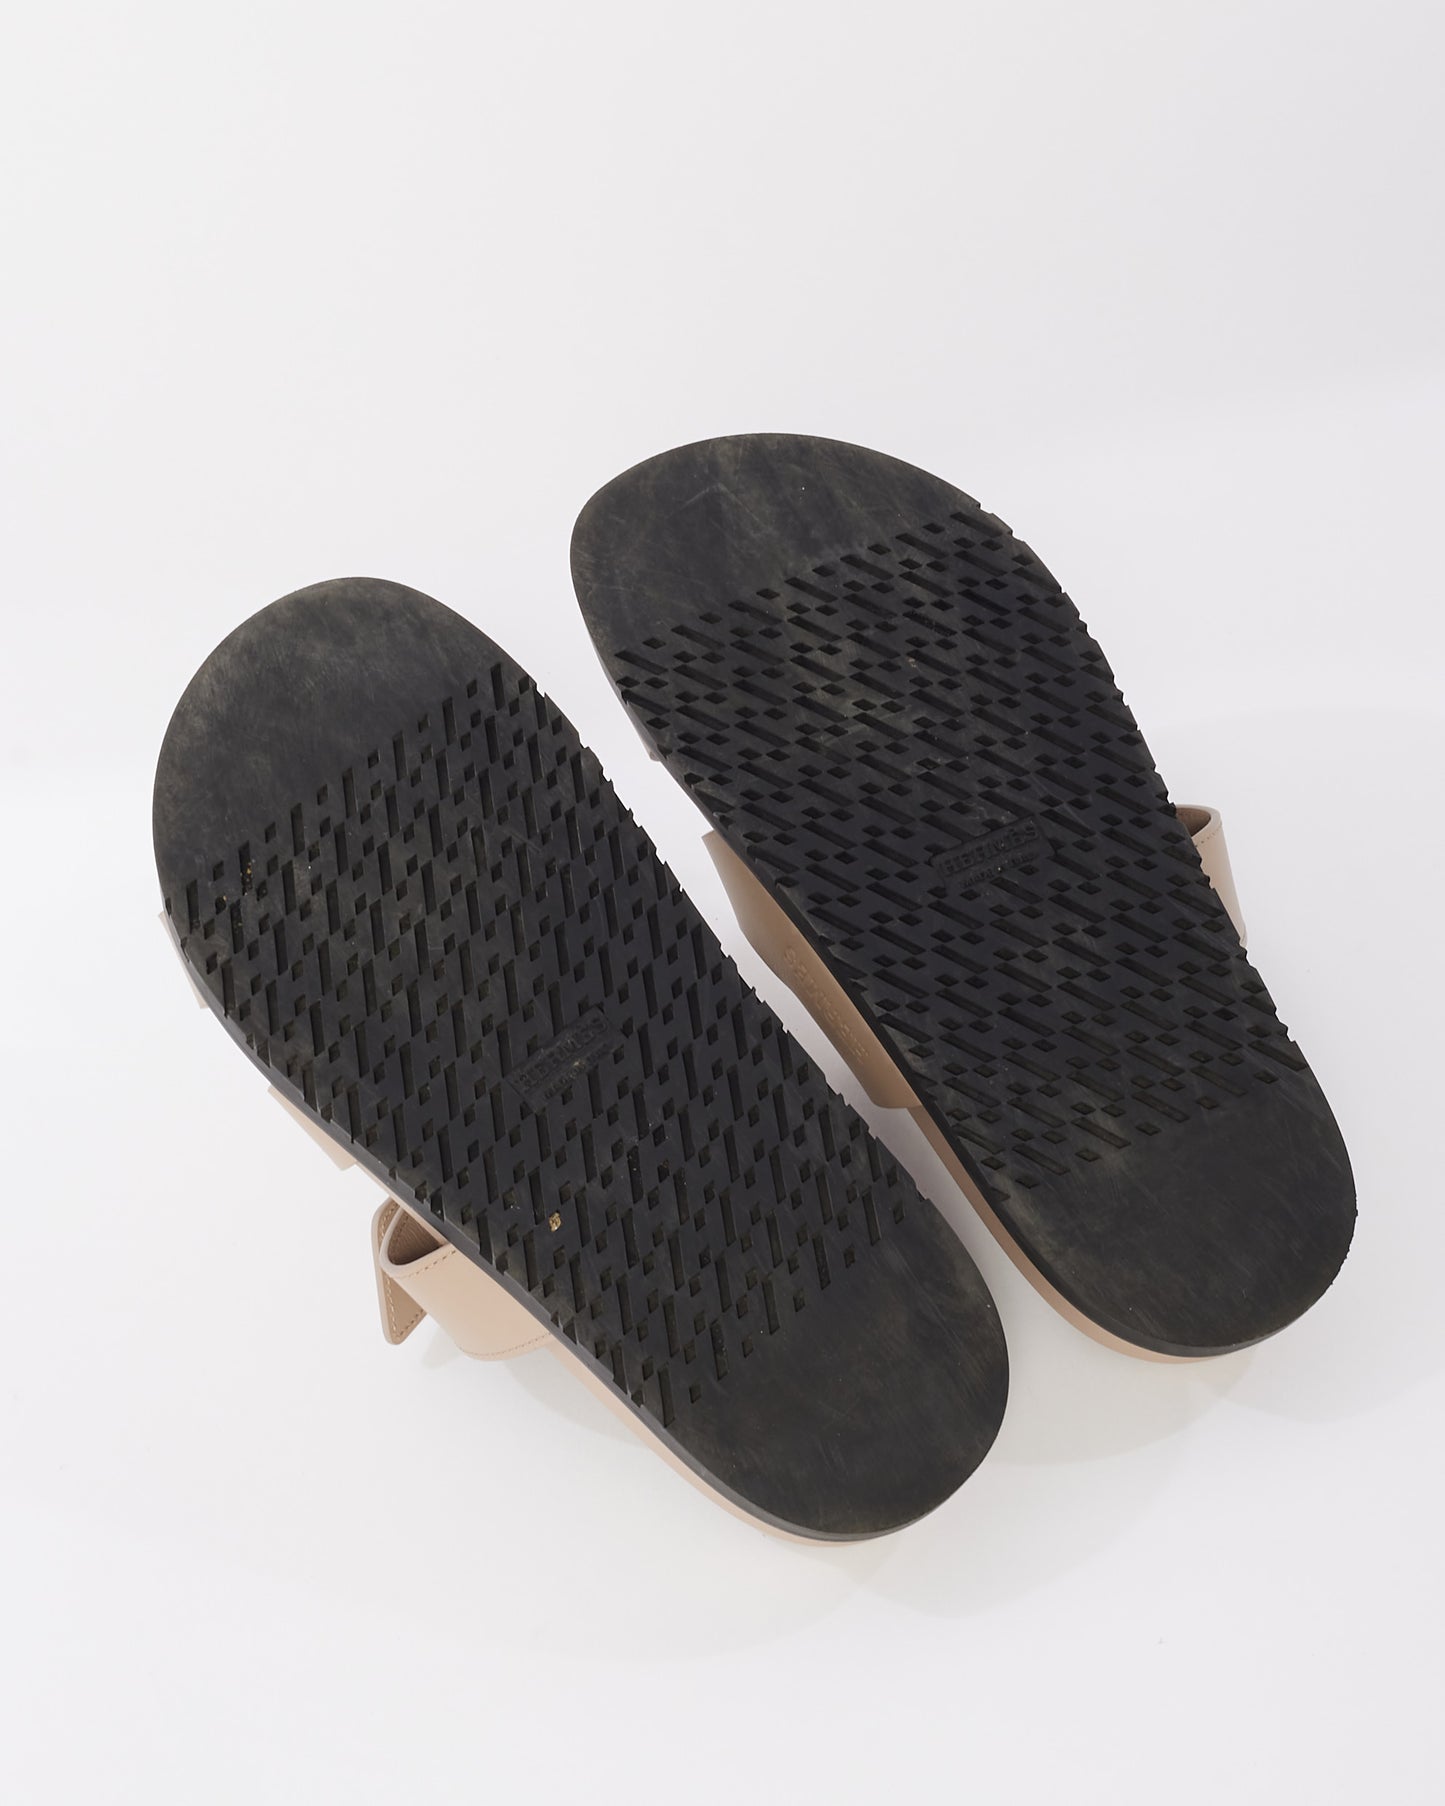 Hermès "Beige Mastic" Leather Chypre Sandals - 39.5